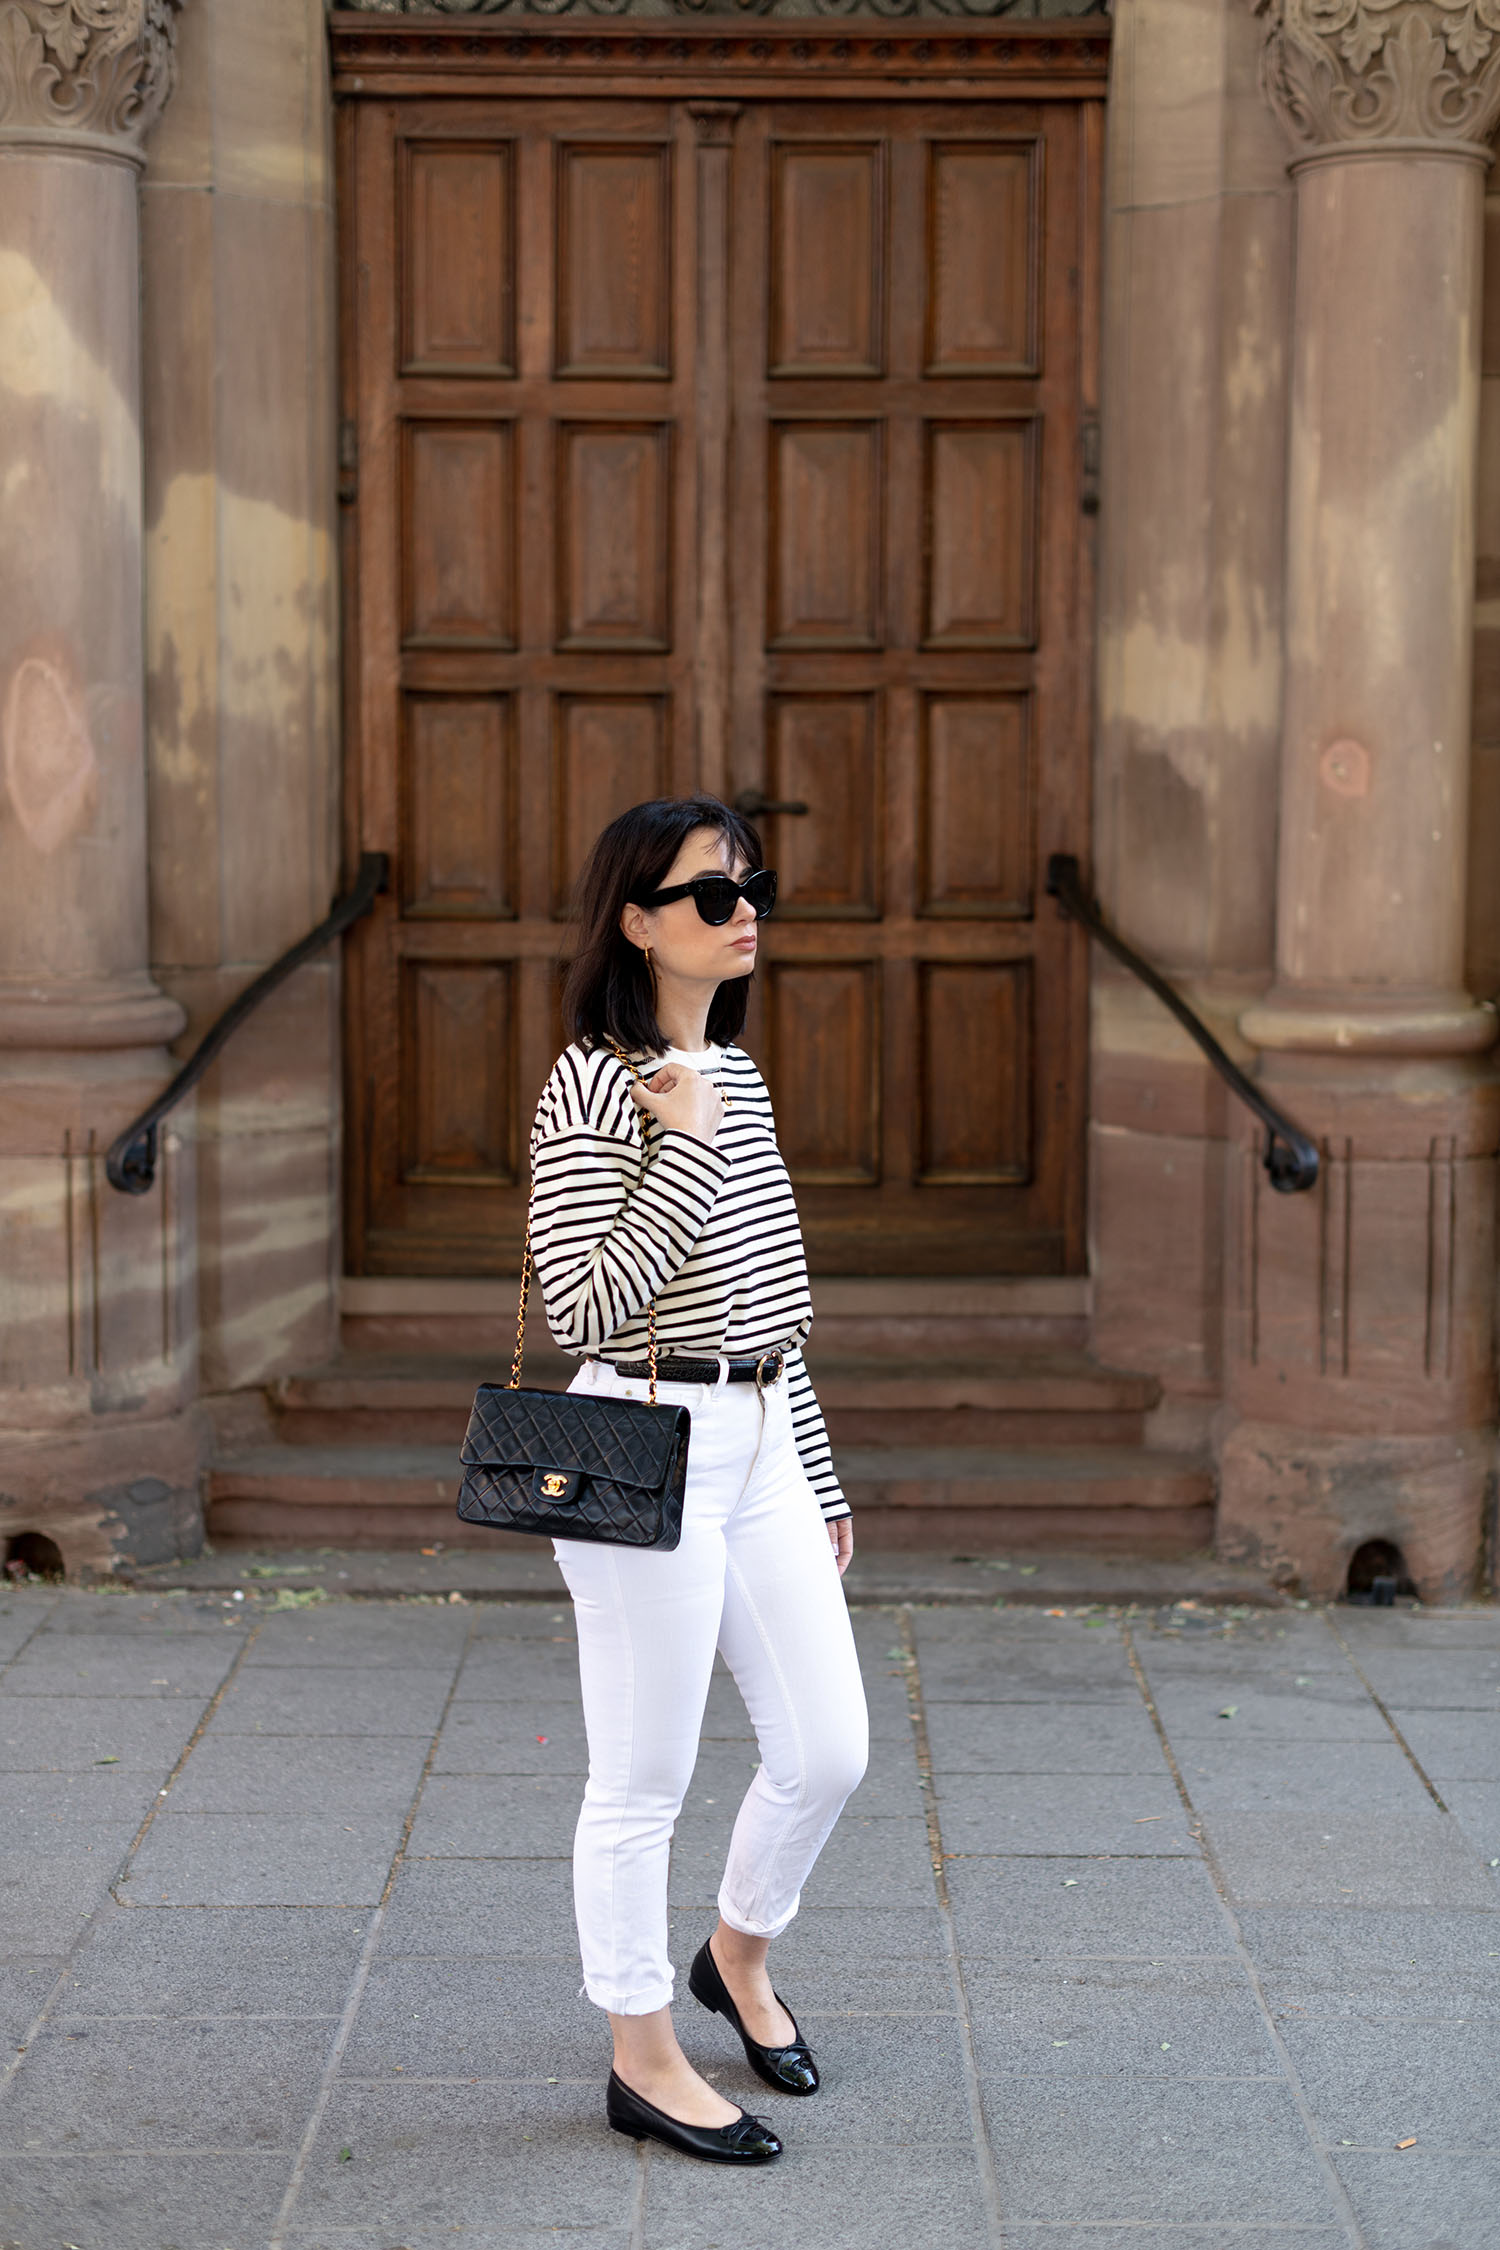 Coco & Voltaire - Zara stripe top, Chanel ballet flats, Mango jeans